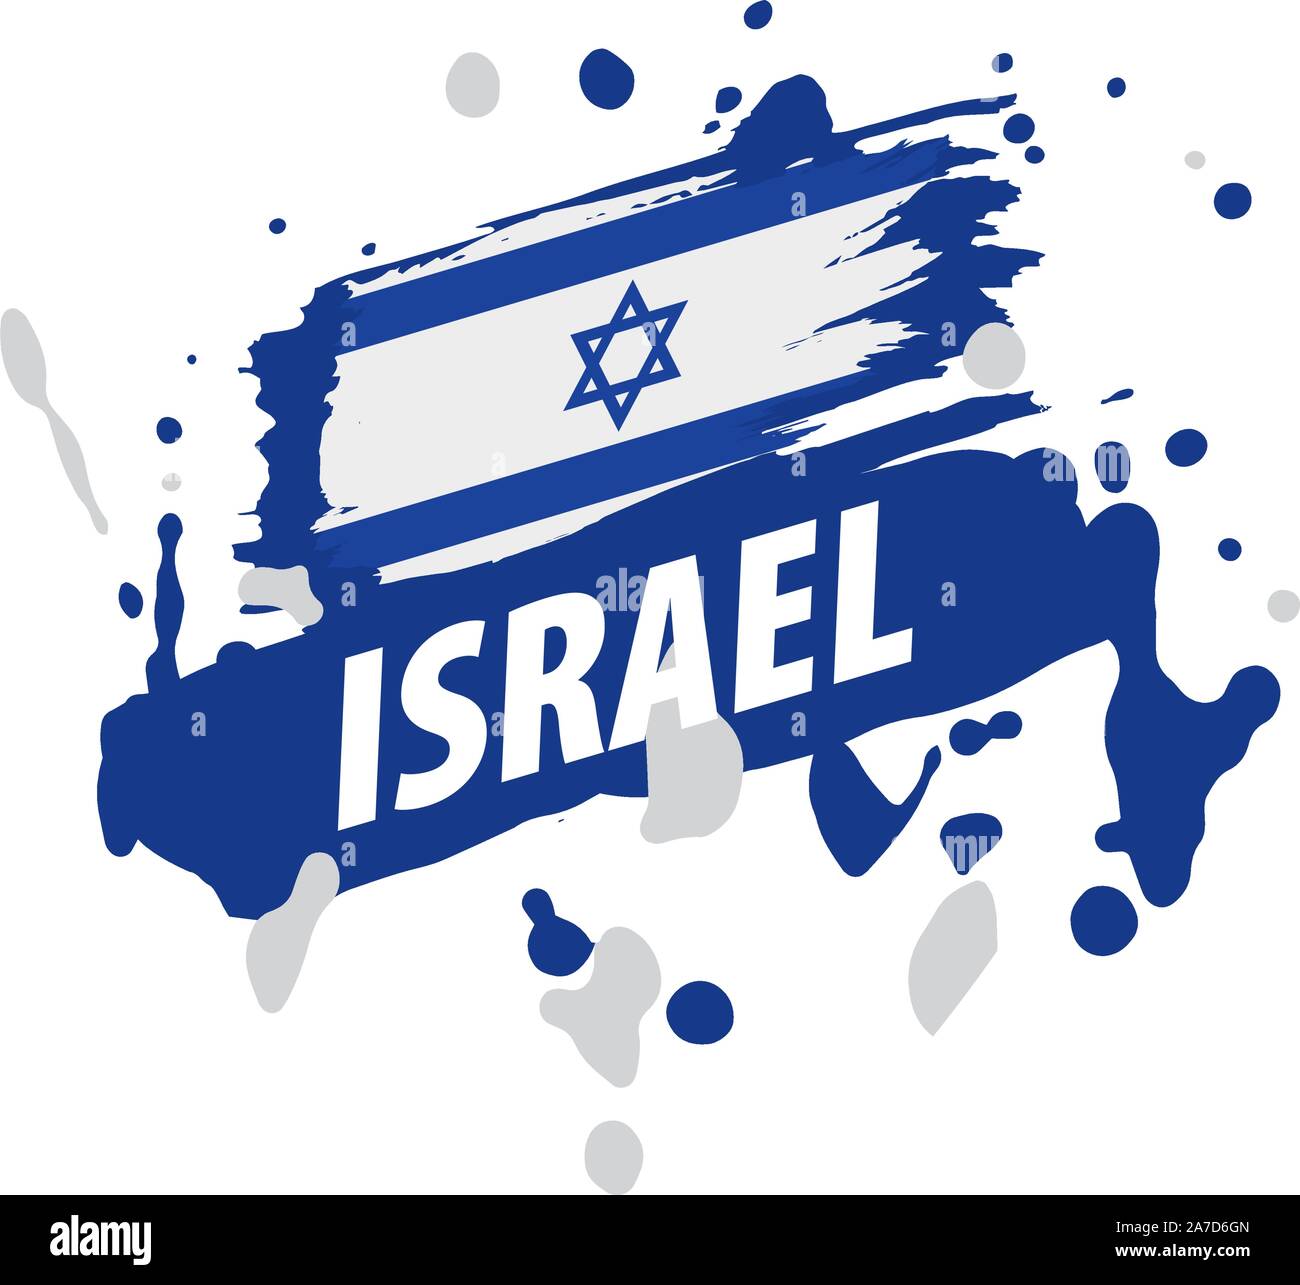 Israel flag Royalty Free Vector Image - VectorStock